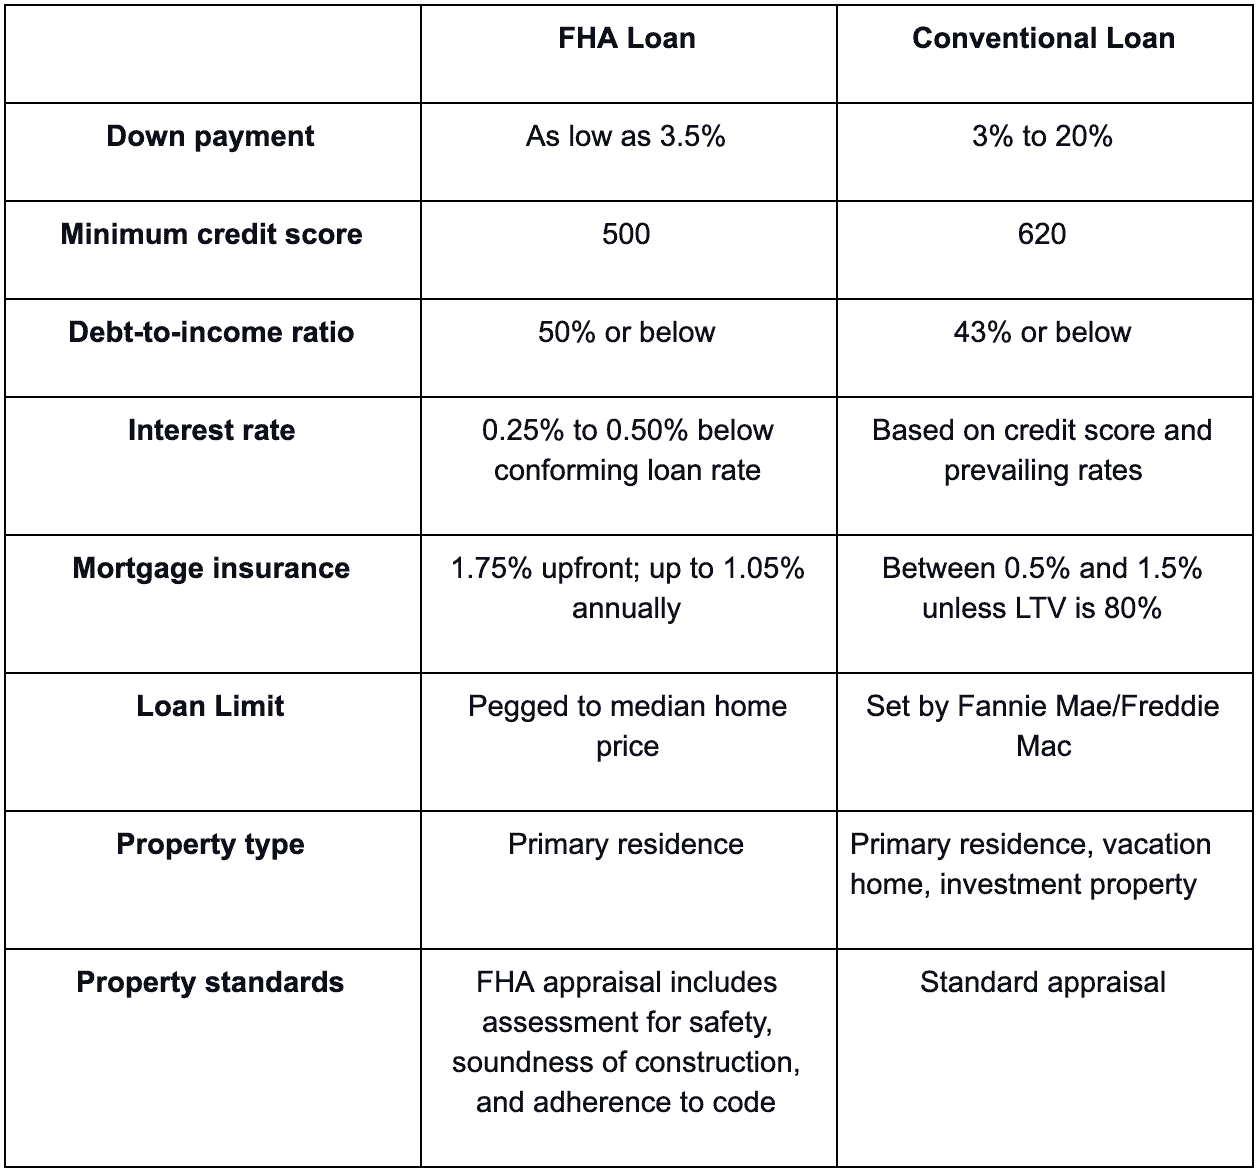 fha loan vs conventional loan